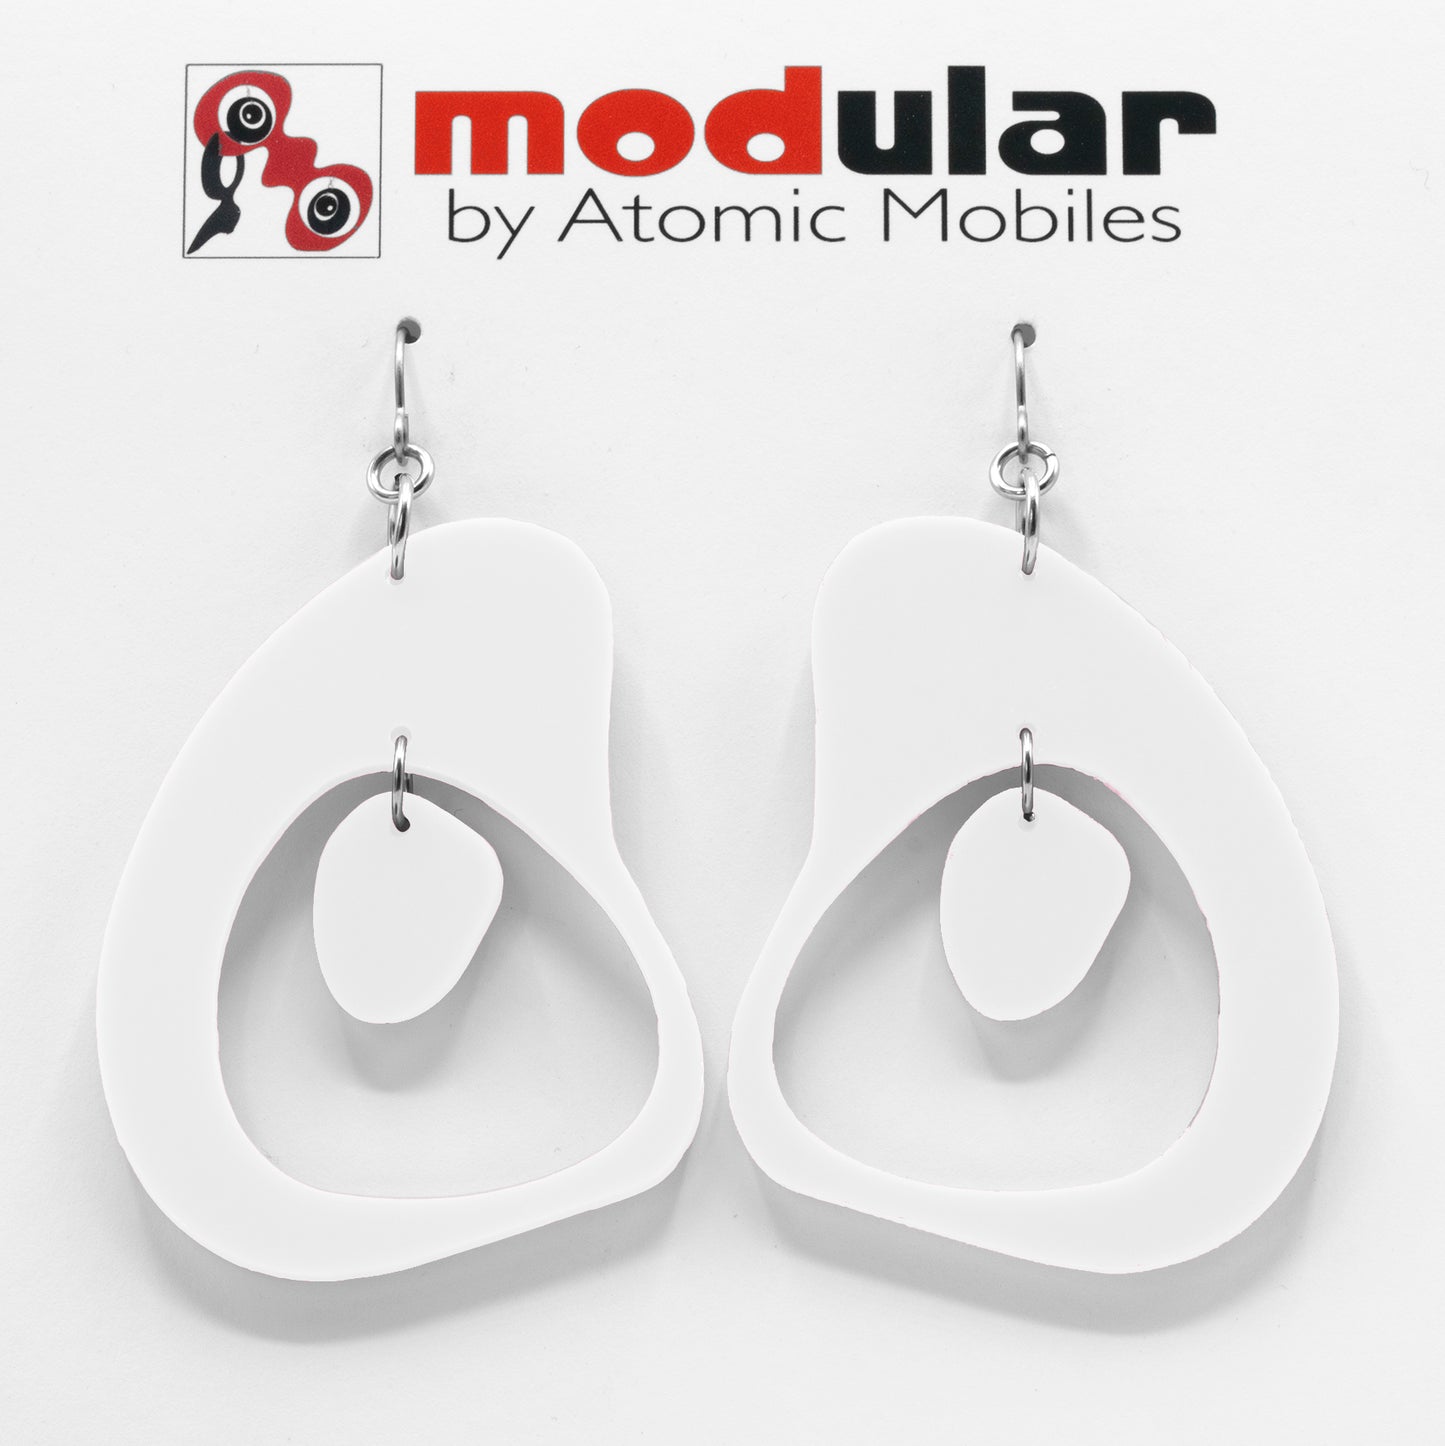 MODular Earrings - Boomerang Statement Earrings in White by AtomicMobiles.com - retro era inspired mod handmade jewelry